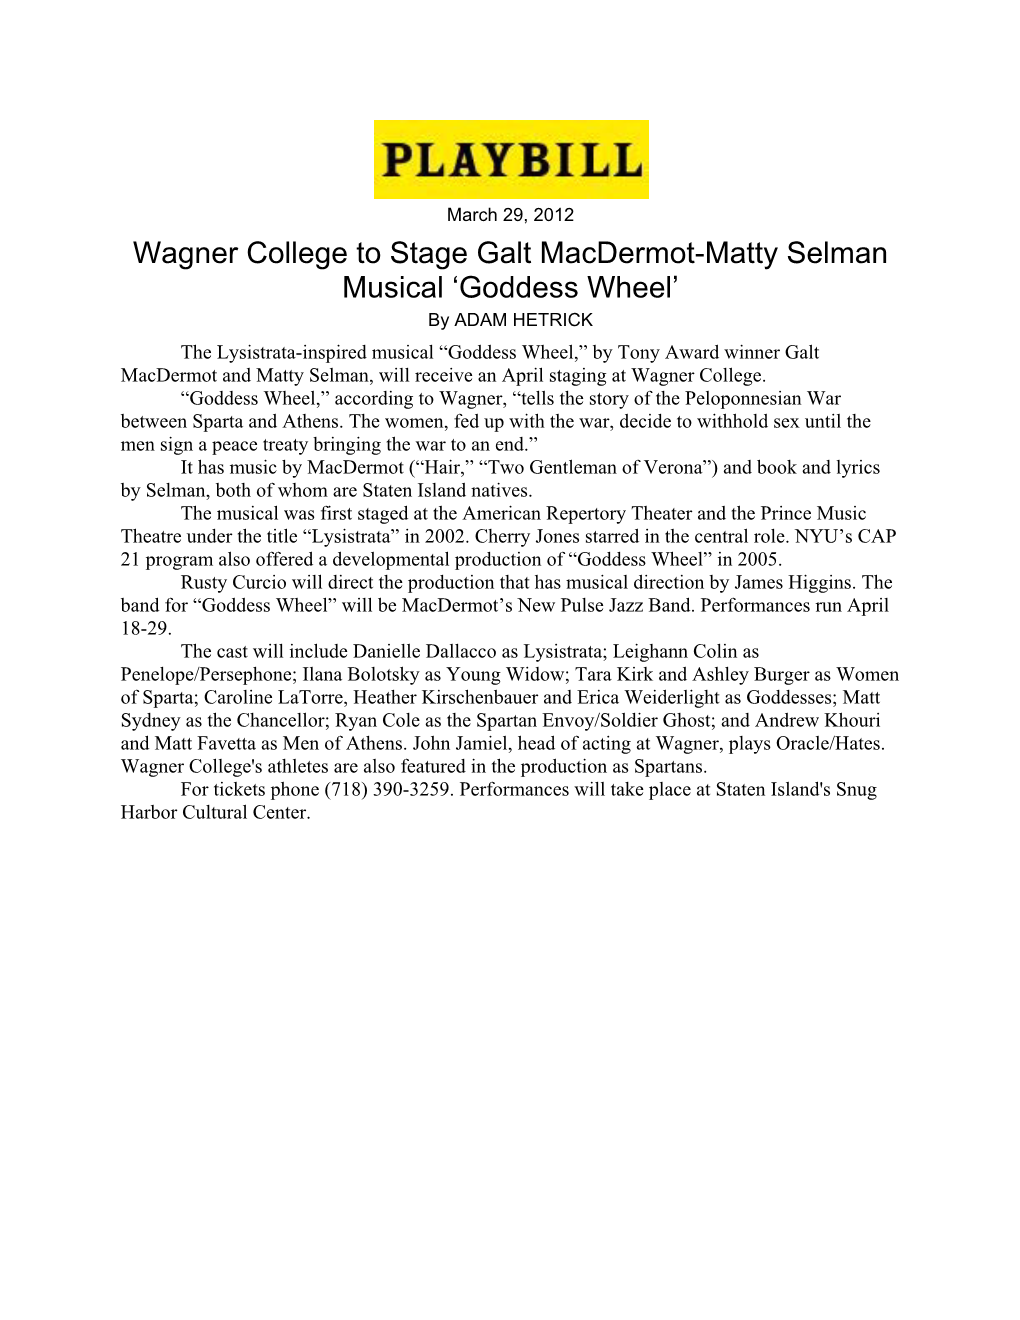 Wagner College to Stage Galt Macdermot-Matty Selman Musical 'Goddess Wheel'